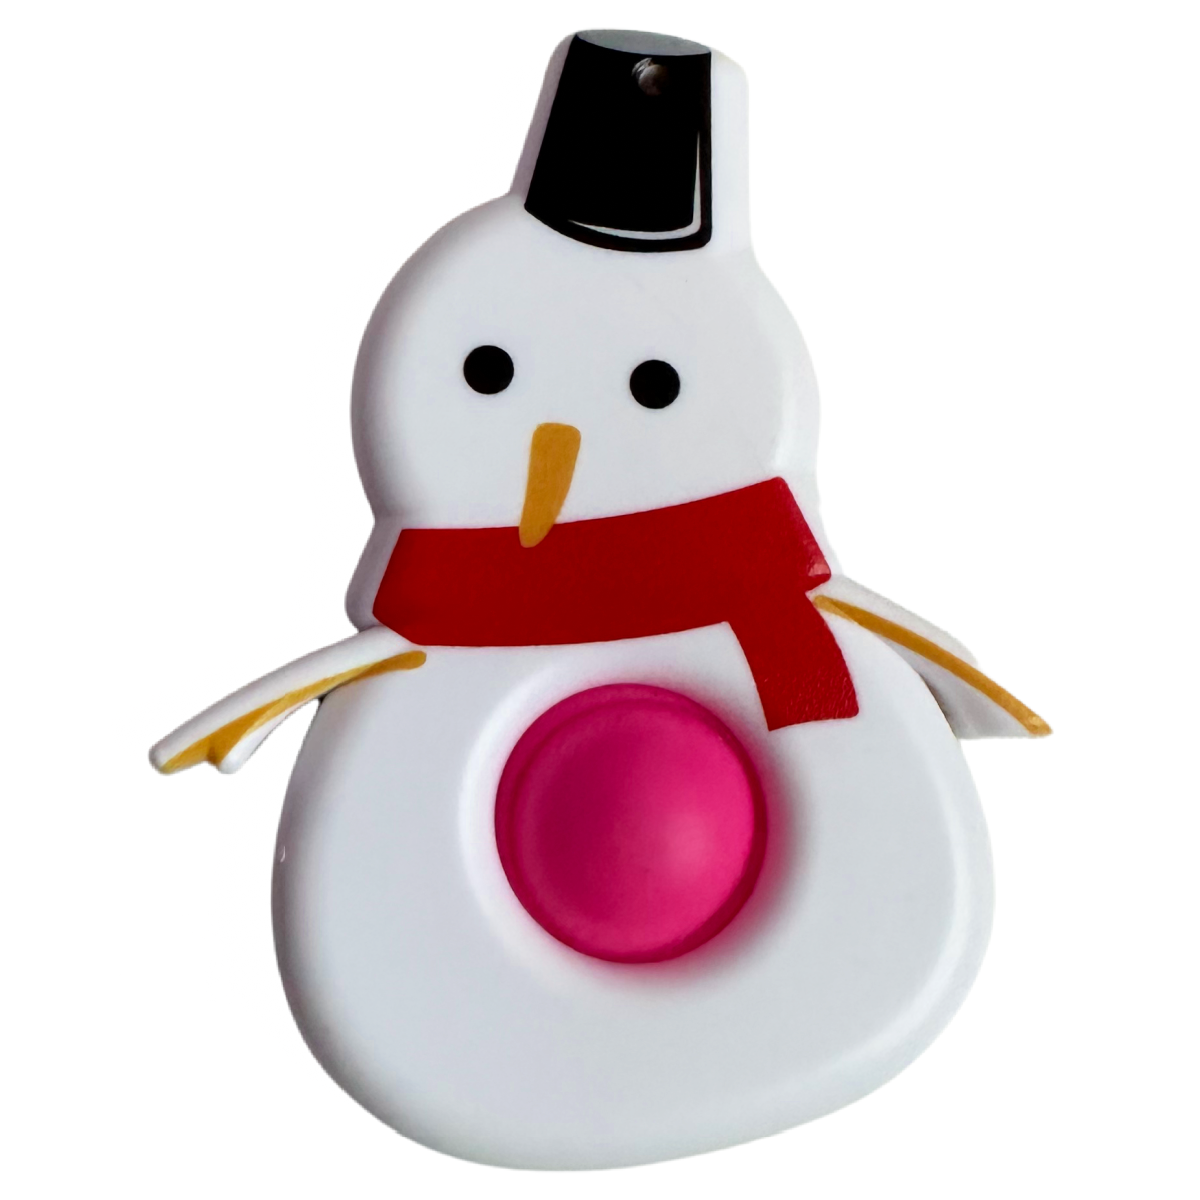 13pcs Snowman Decorating Kit, Snowman Making Kit Winter Party Kids Toys Christmas Holiday Decoration Gift